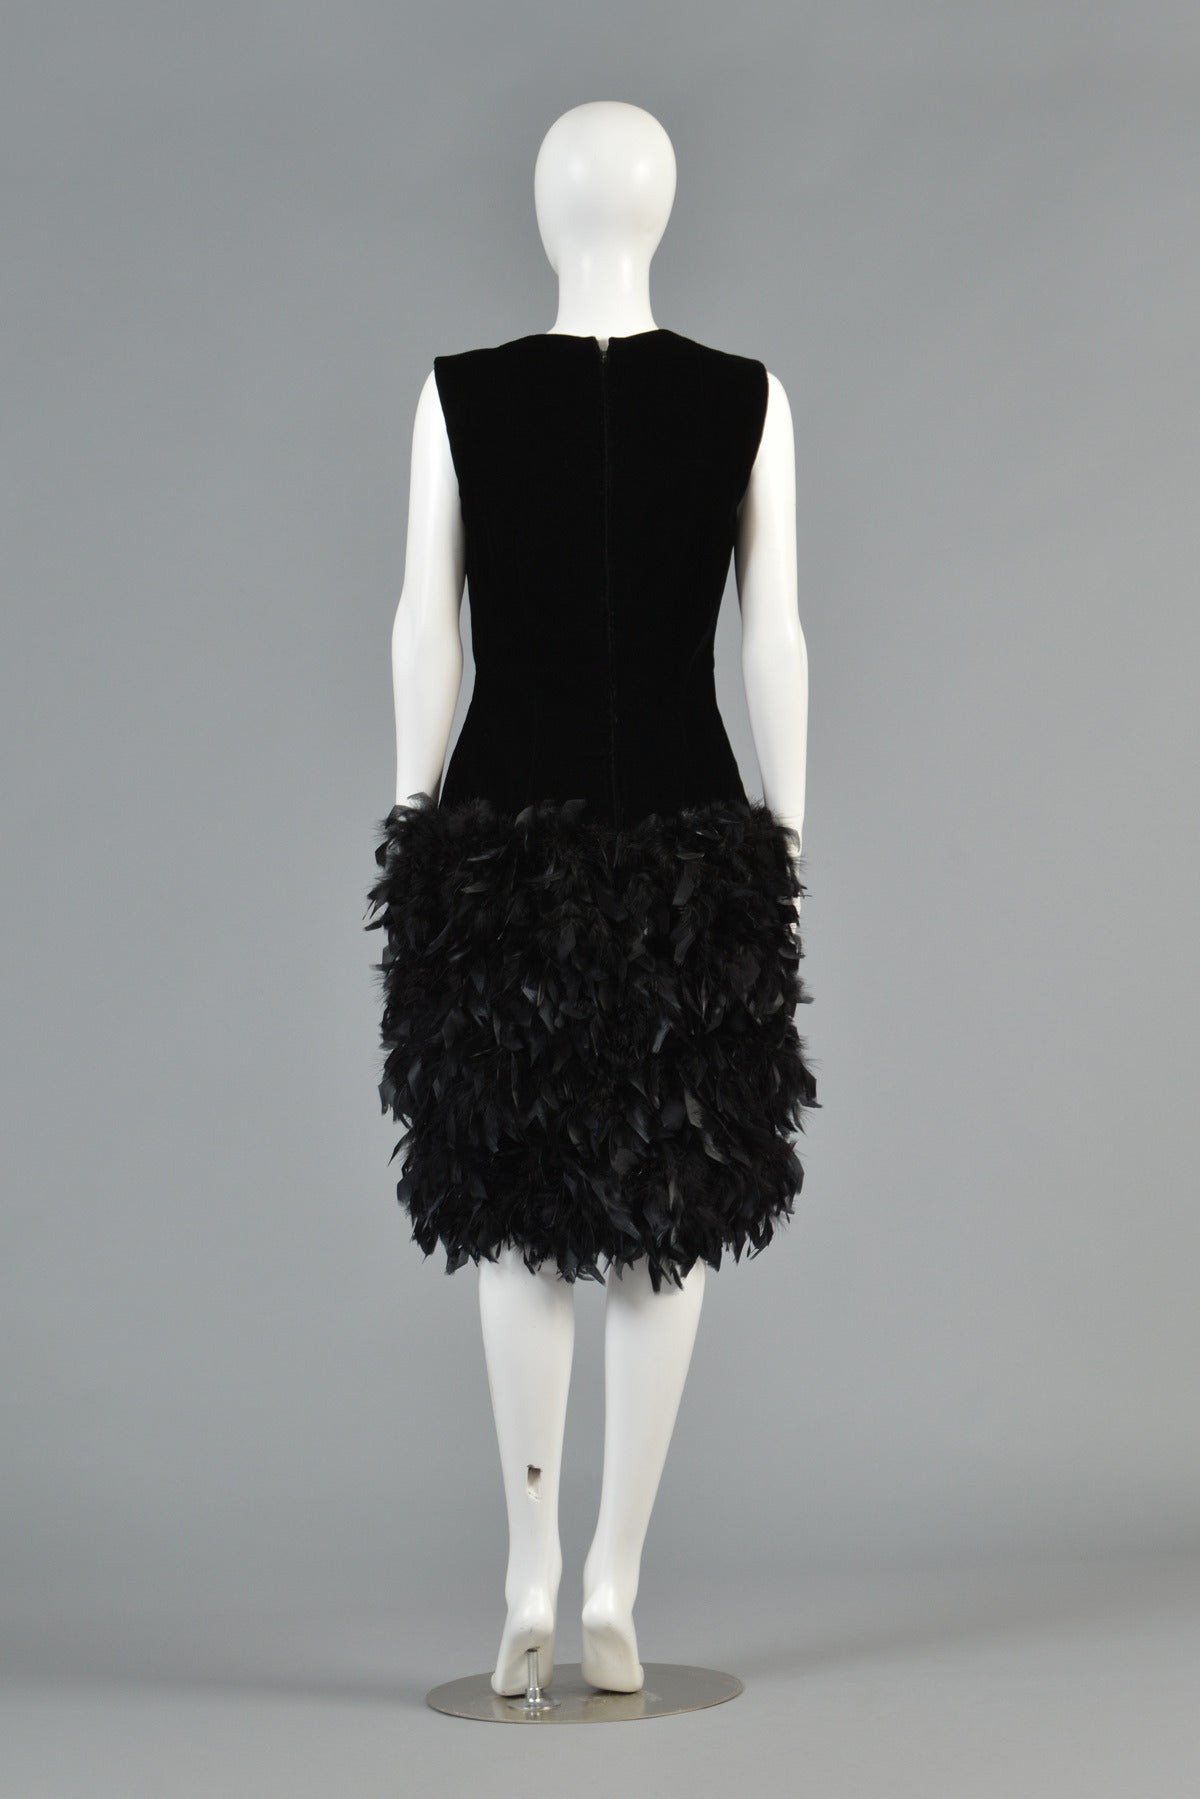 Black Velvet Cocktail Dress with Feathered Skirt For Sale 1